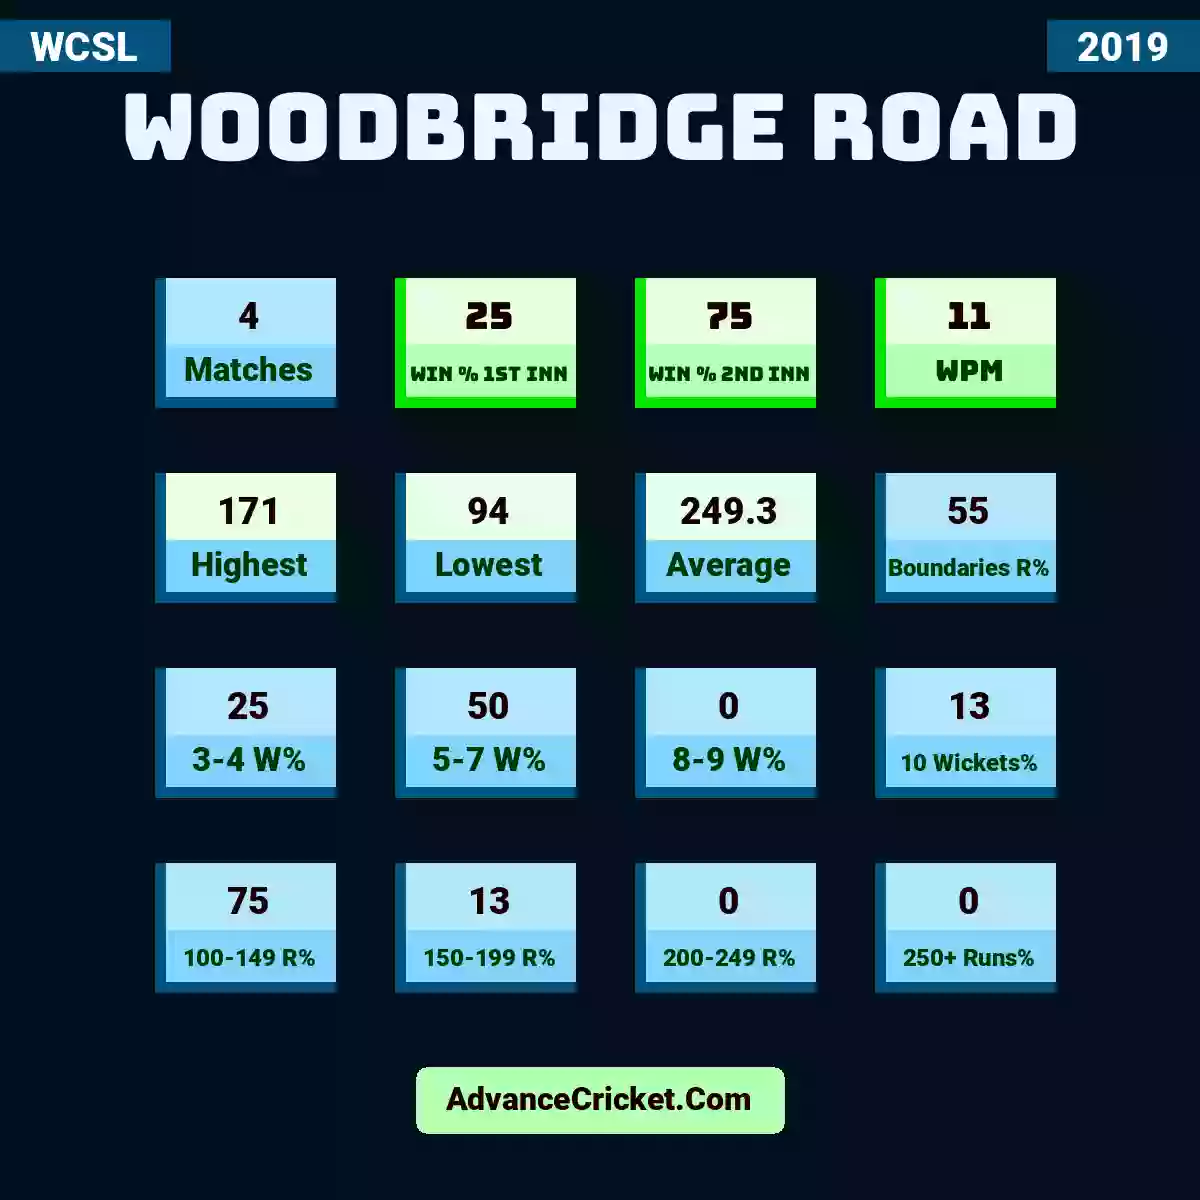 Image showing Woodbridge Road with Matches: 4, Win % 1st Inn: 25, Win % 2nd Inn: 75, WPM: 11, Highest: 171, Lowest: 94, Average: 249.3, Boundaries R%: 55, 3-4 W%: 25, 5-7 W%: 50, 8-9 W%: 0, 10 Wickets%: 13, 100-149 R%: 75, 150-199 R%: 13, 200-249 R%: 0, 250+ Runs%: 0.